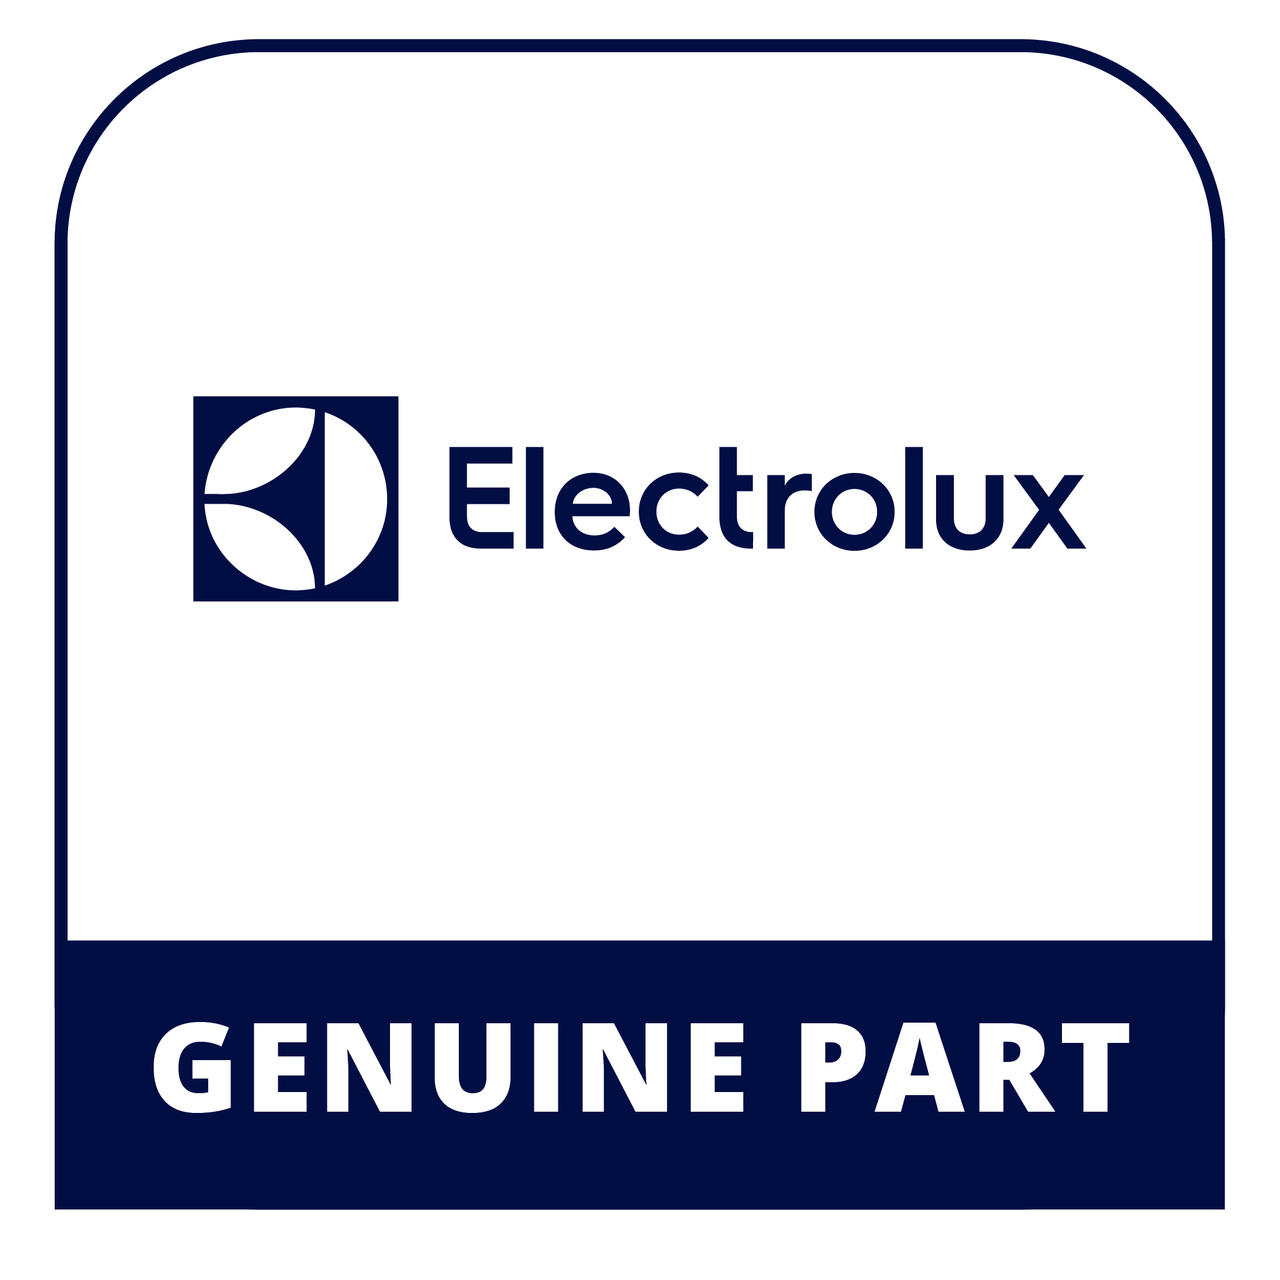 Frigidaire - Electrolux 5304529407 Front Panel - Genuine Electrolux Part